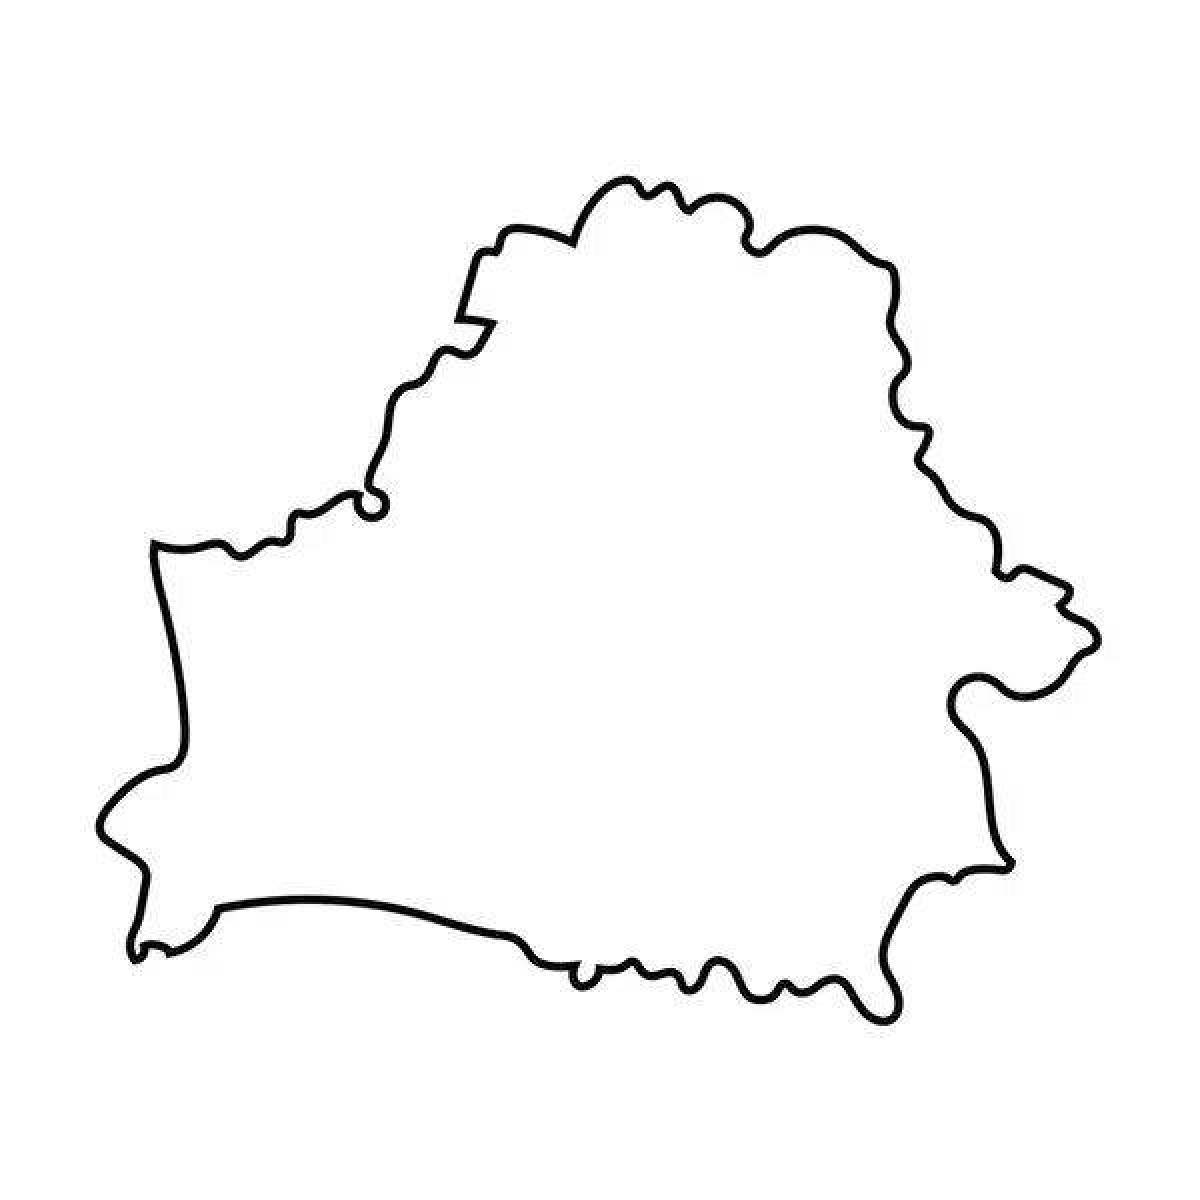 Завораживающая карта беларуси